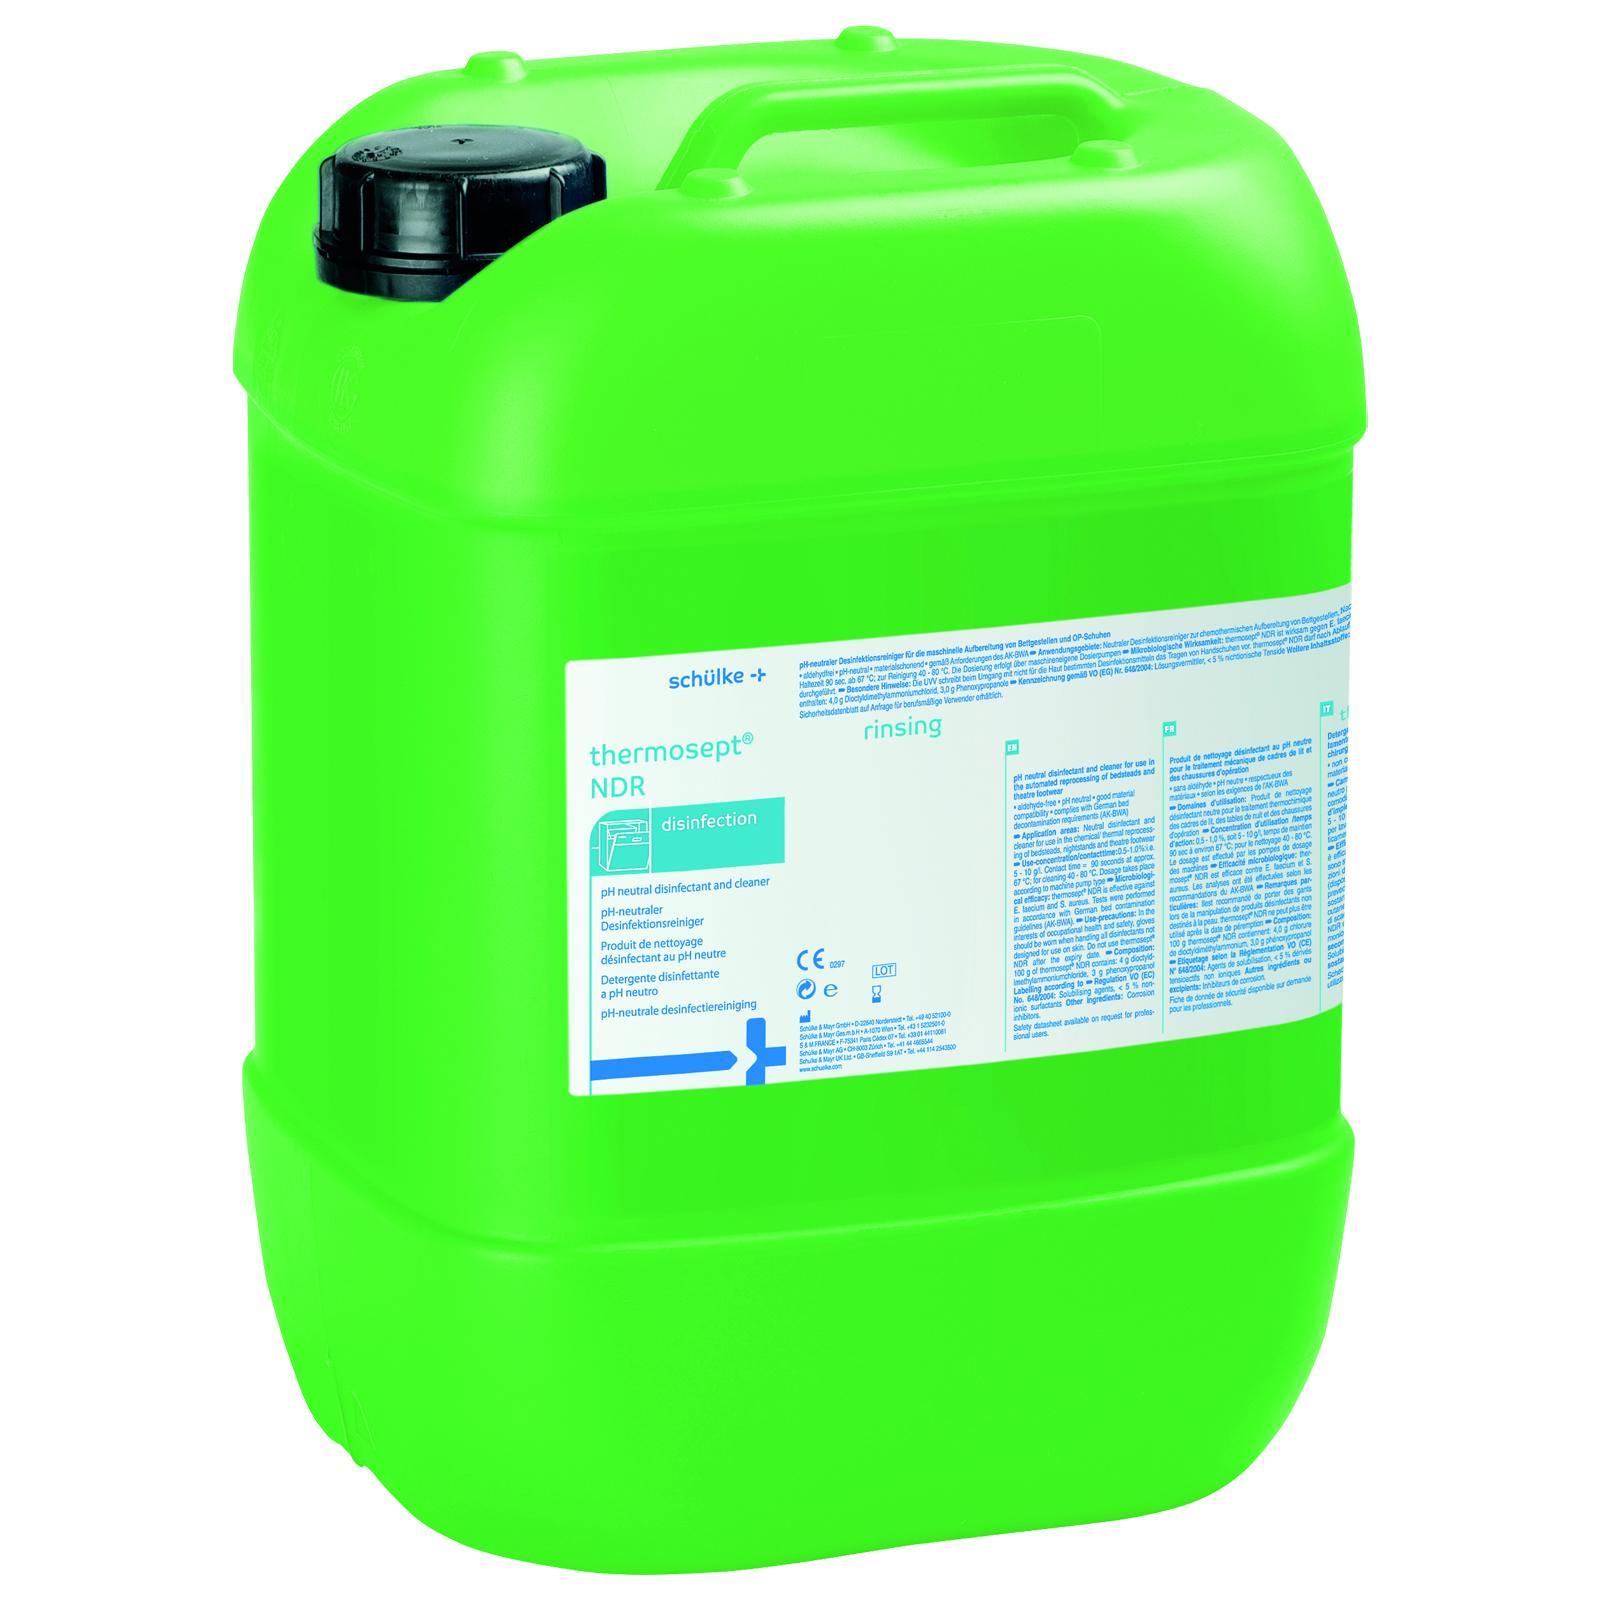 thermosept NDR -D- 20 Liter Instrumentendesinfektion